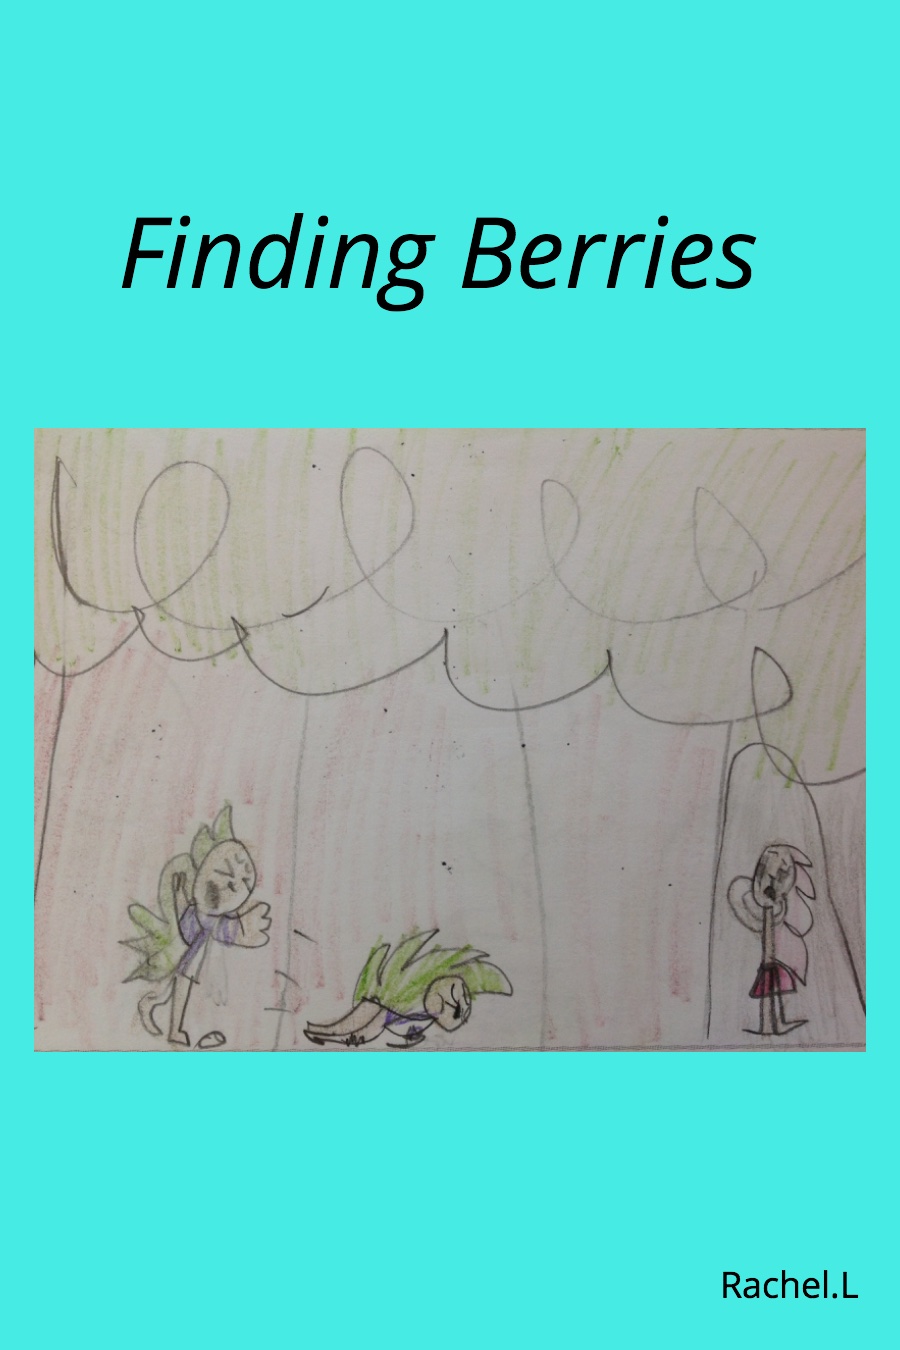 Finding Berries by Rachel L